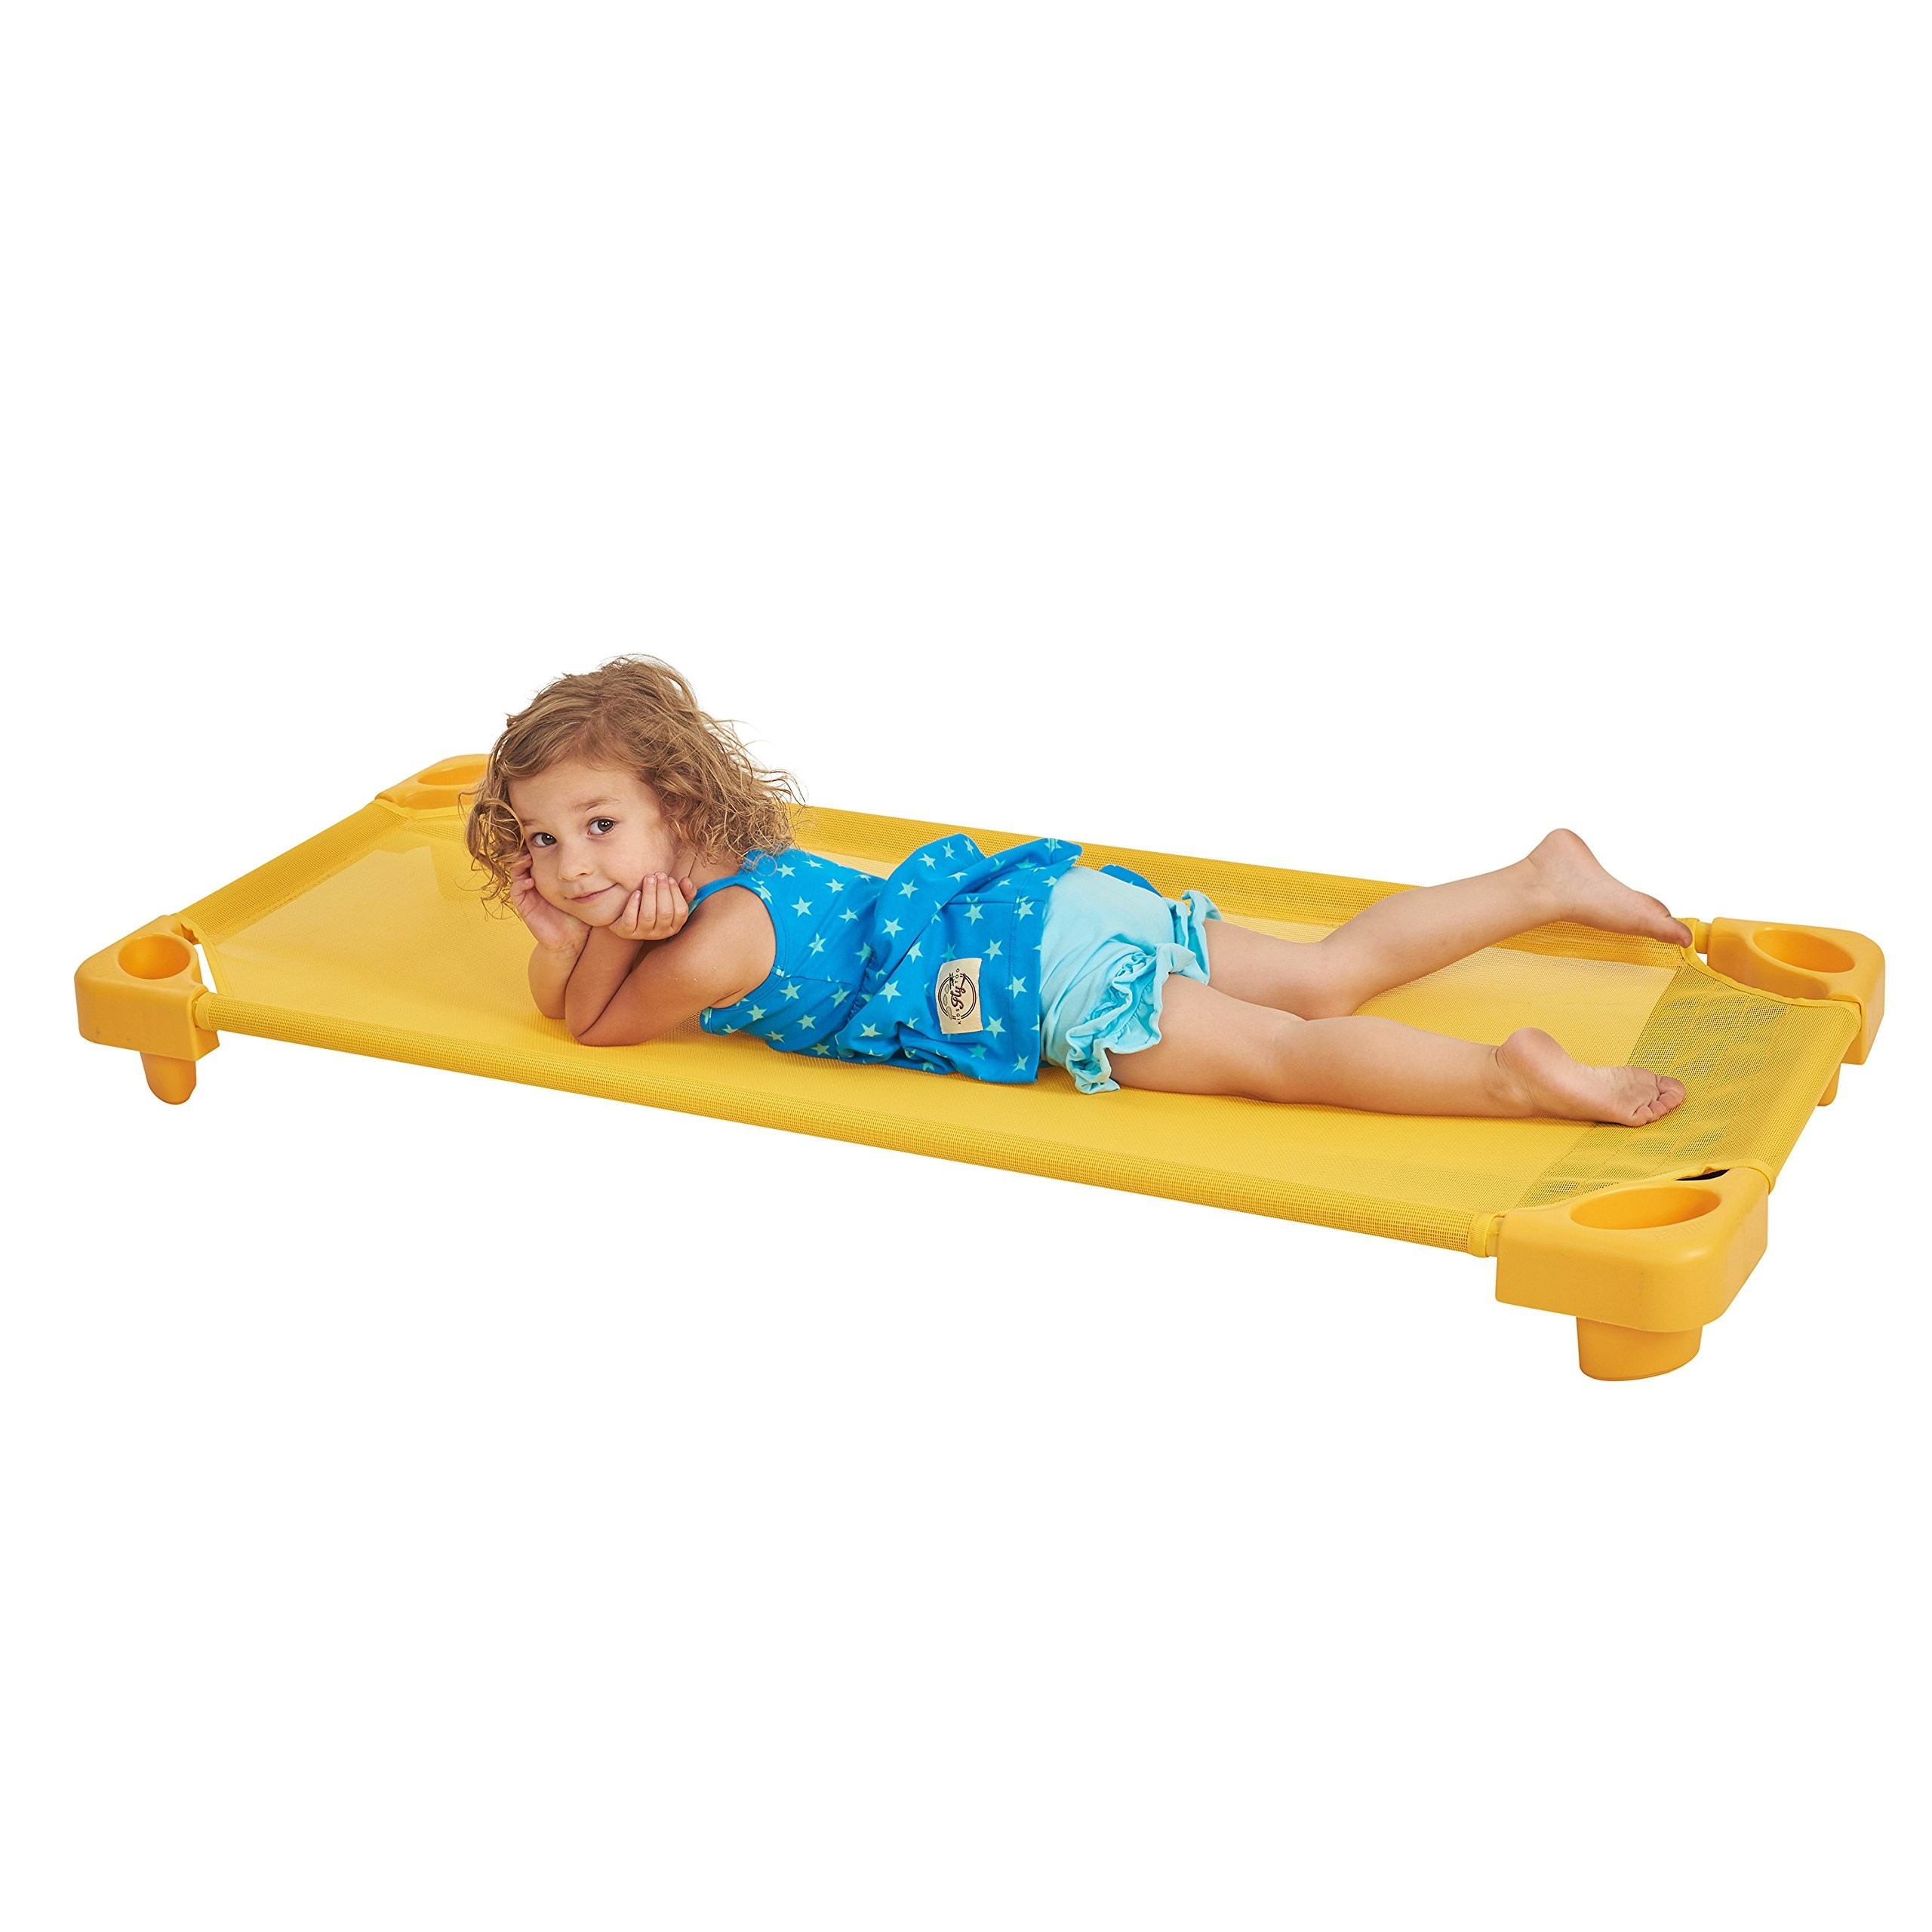 Ecr4kids childrens naptime cot stackable daycare